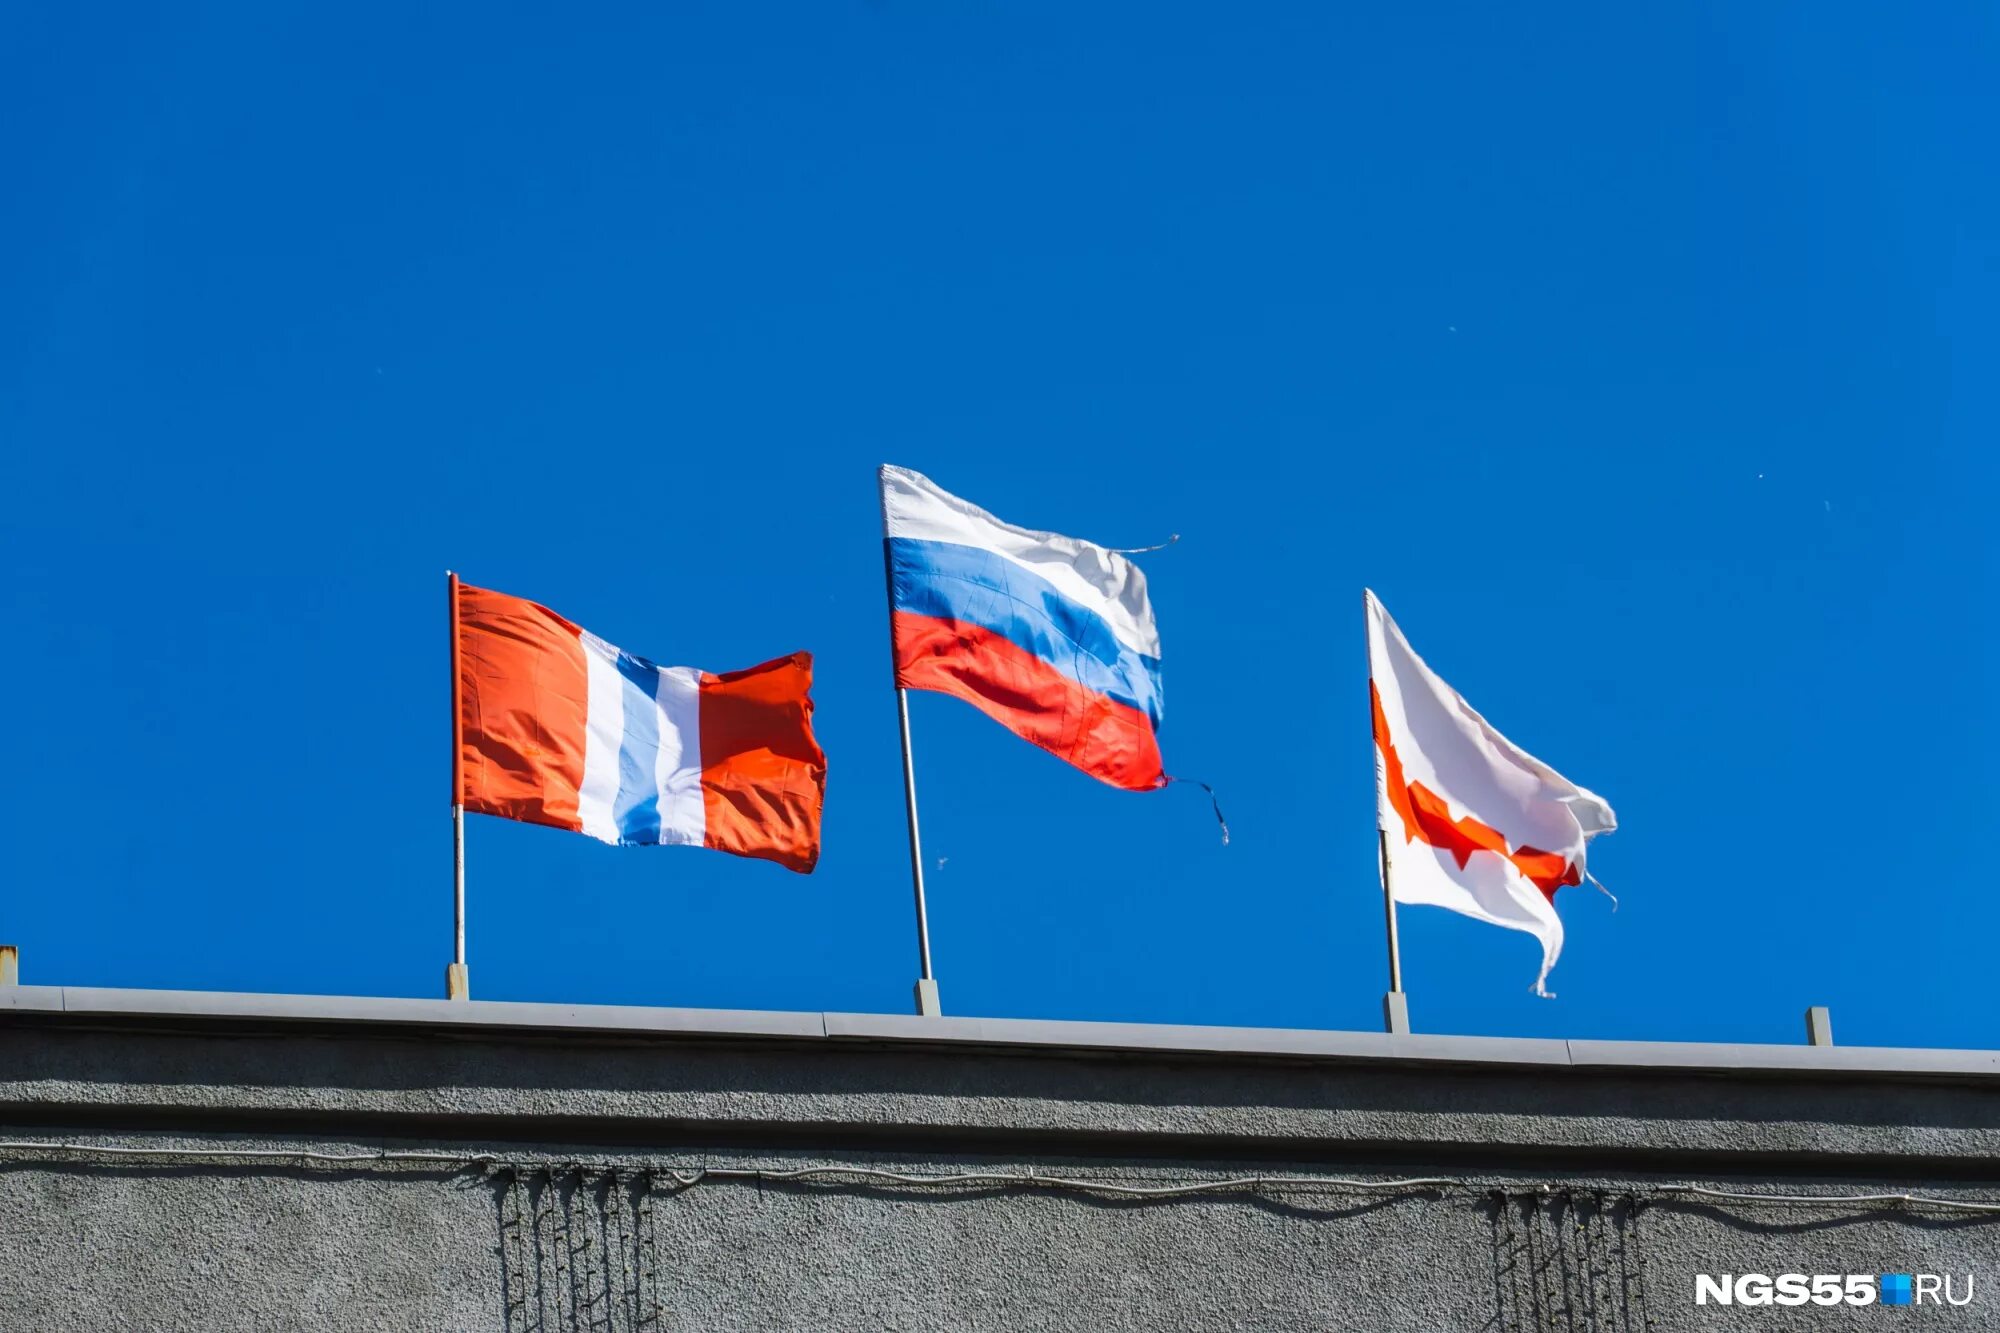 Флаги на здании администрации. Российский флаг на здании. Флагшток на здание. Российский флаг на флагштоке. Почему висят флаги